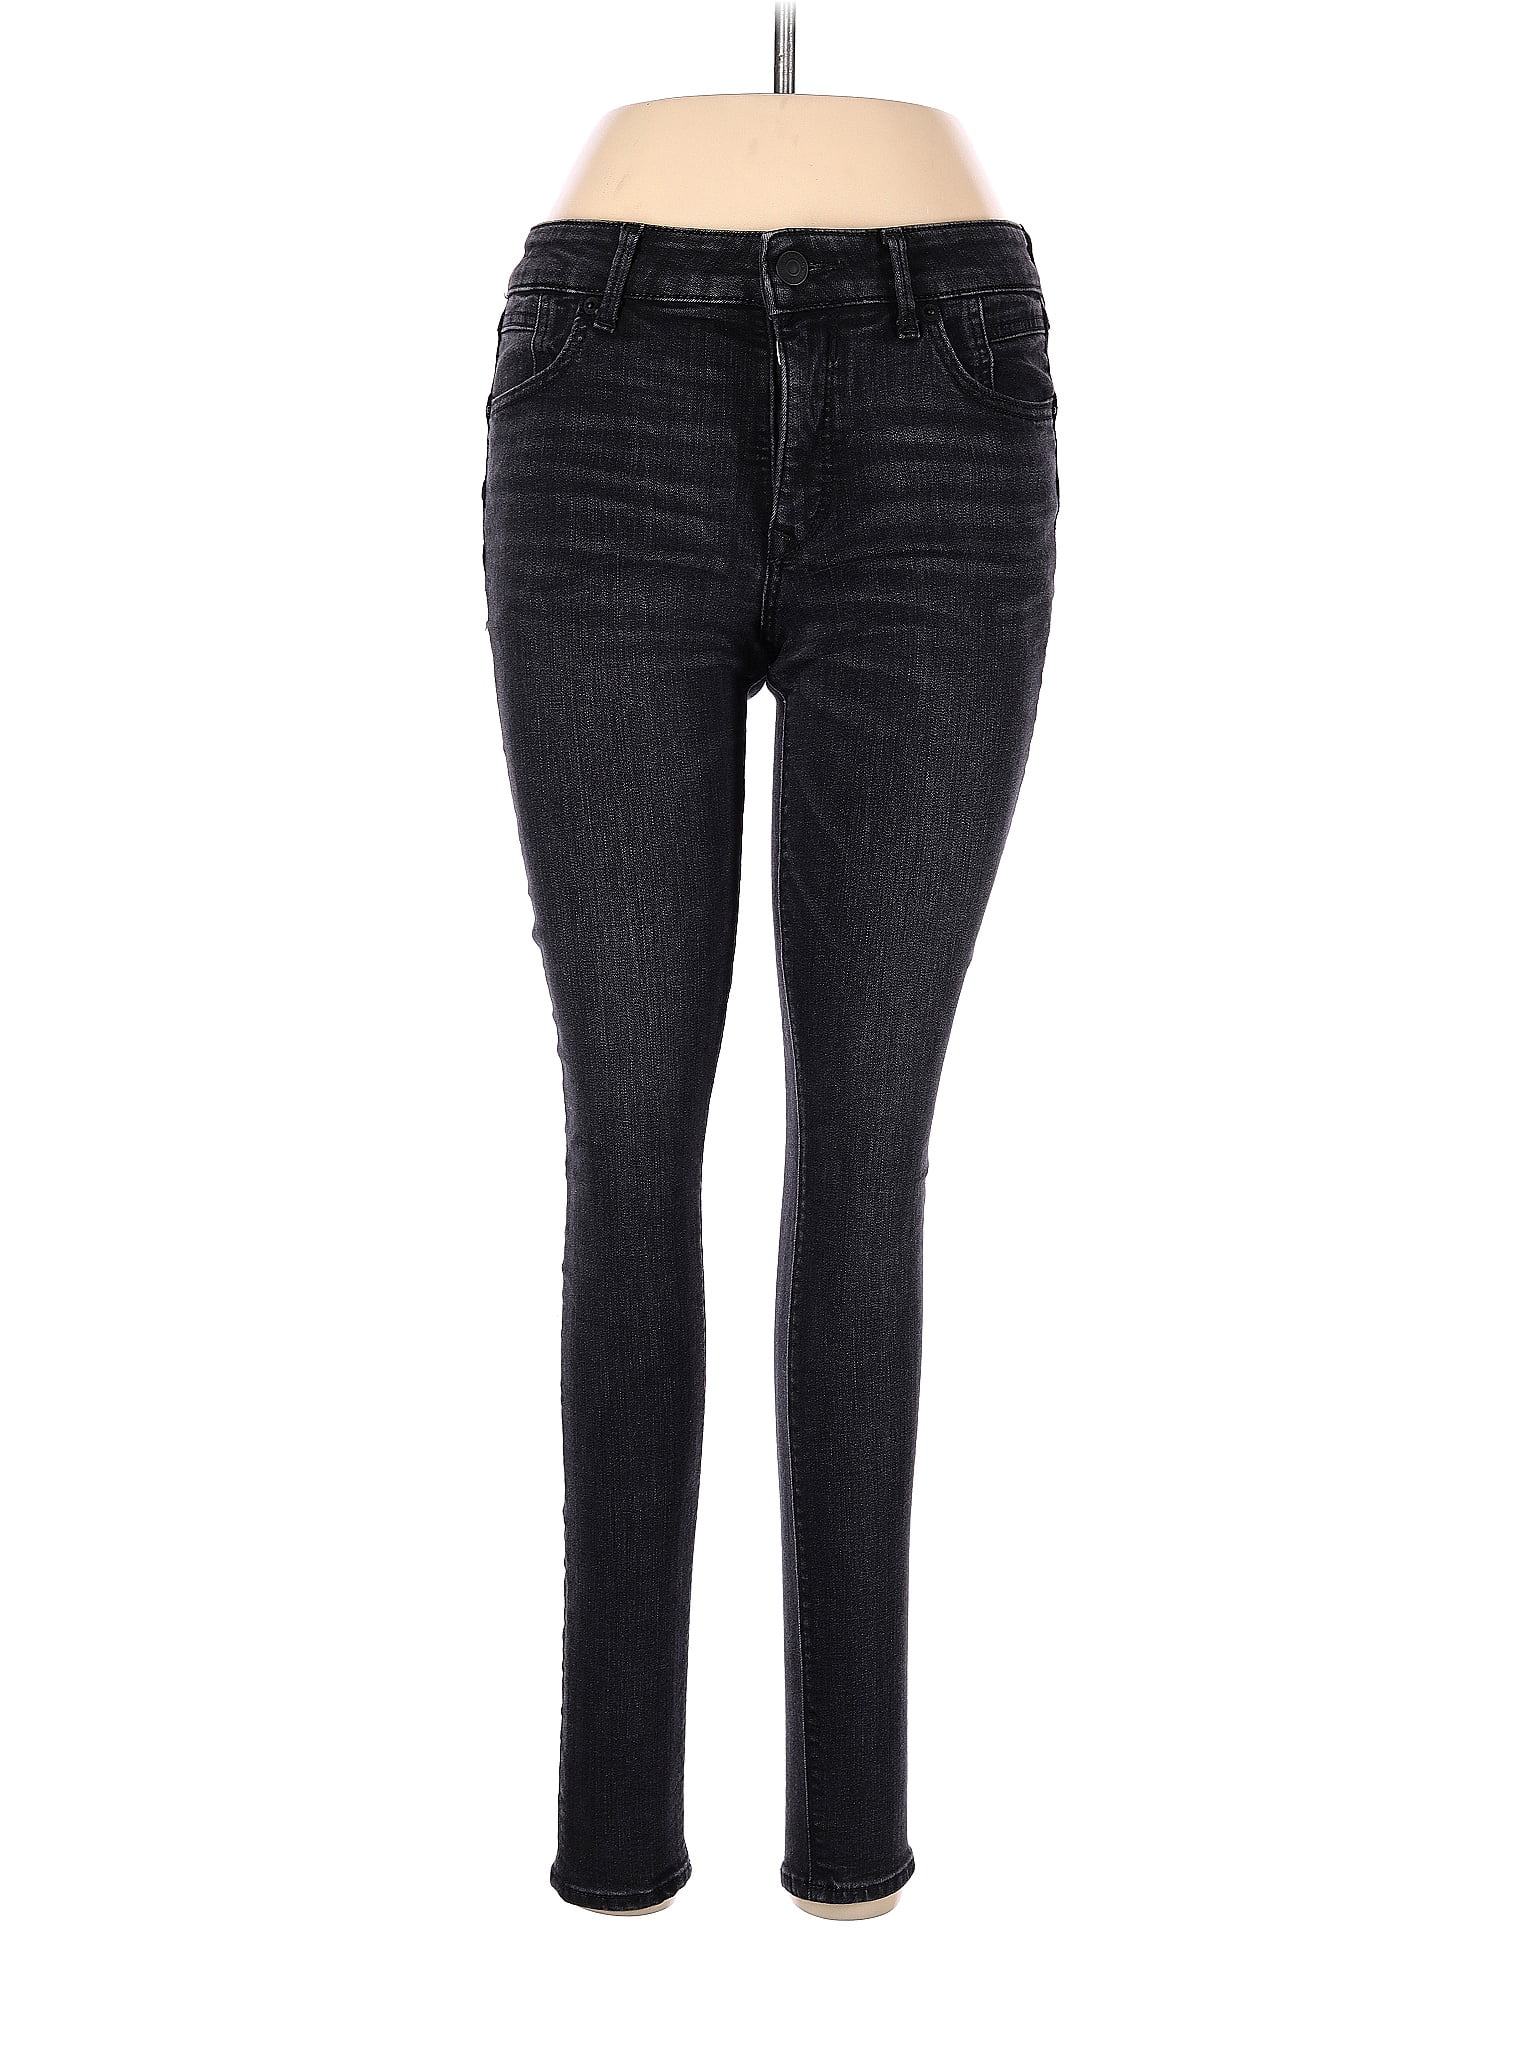 Express Solid Black Jeans Size 6 - 74% off | thredUP